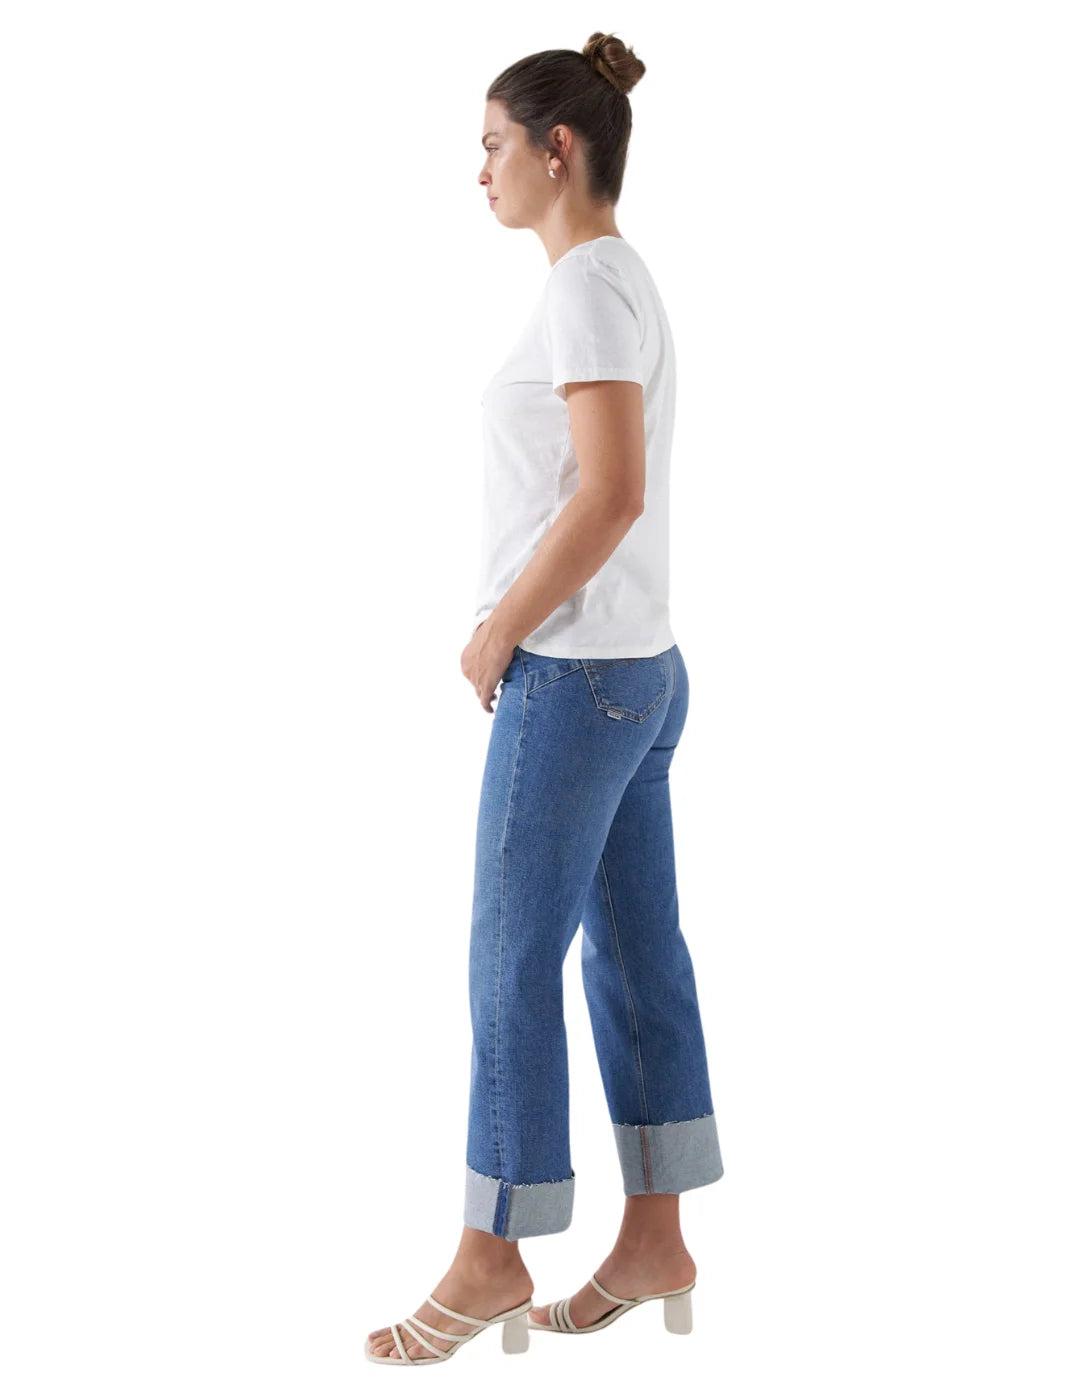 Camiseta Salsa Jeans Laranjas Blanco | Bicos de Fío